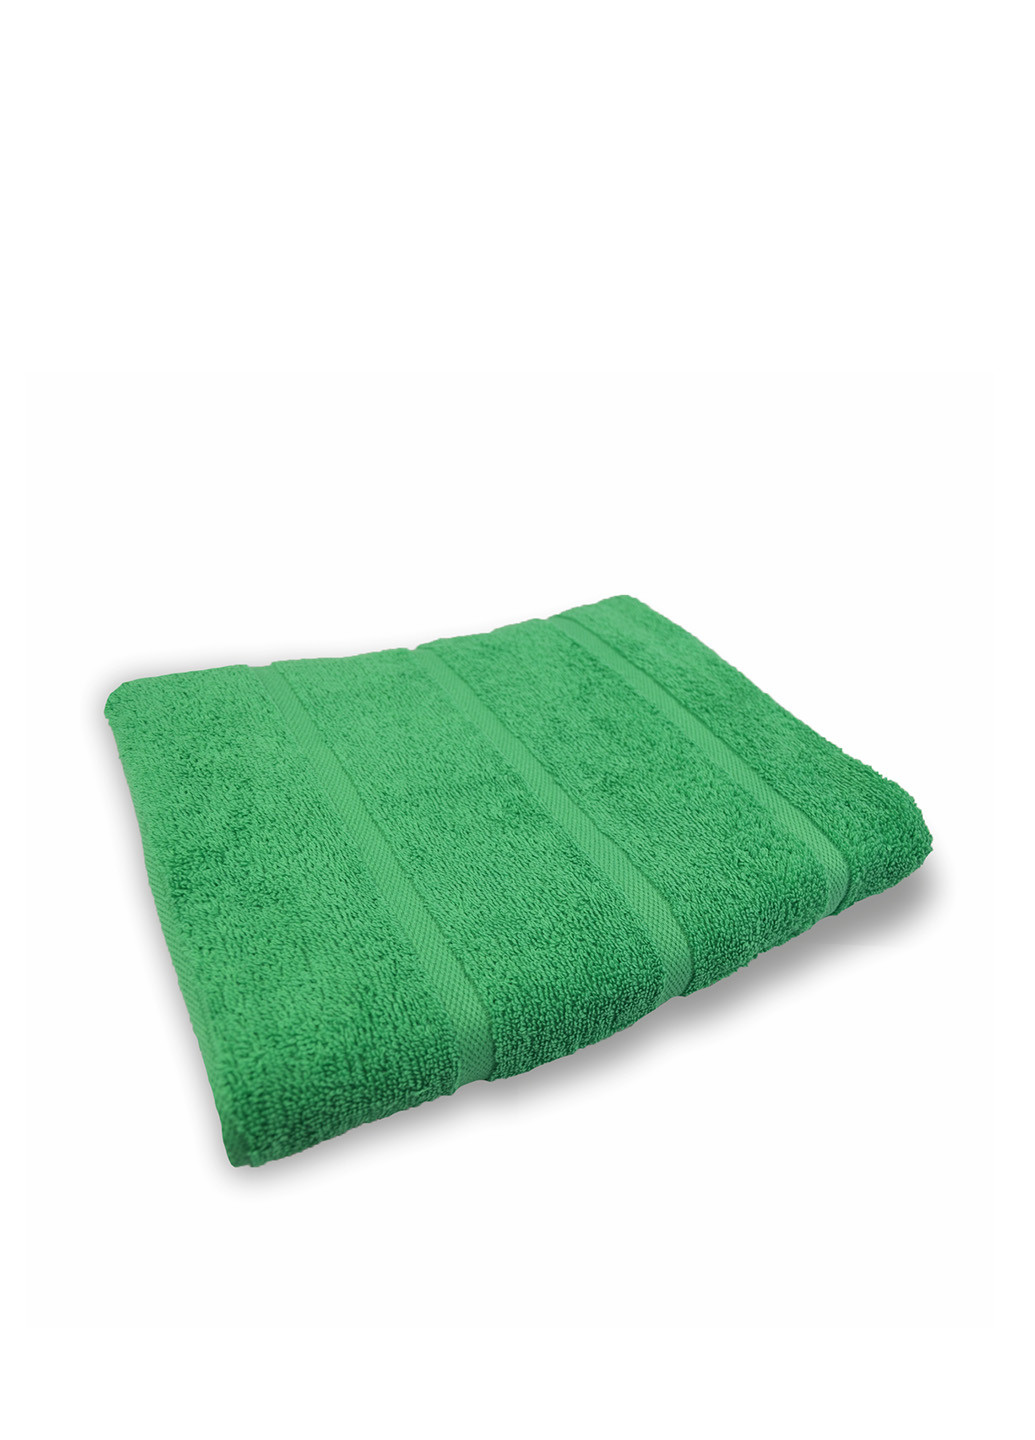 No Brand полотенце, 70х140 см однотонный зеленый производство - Турция